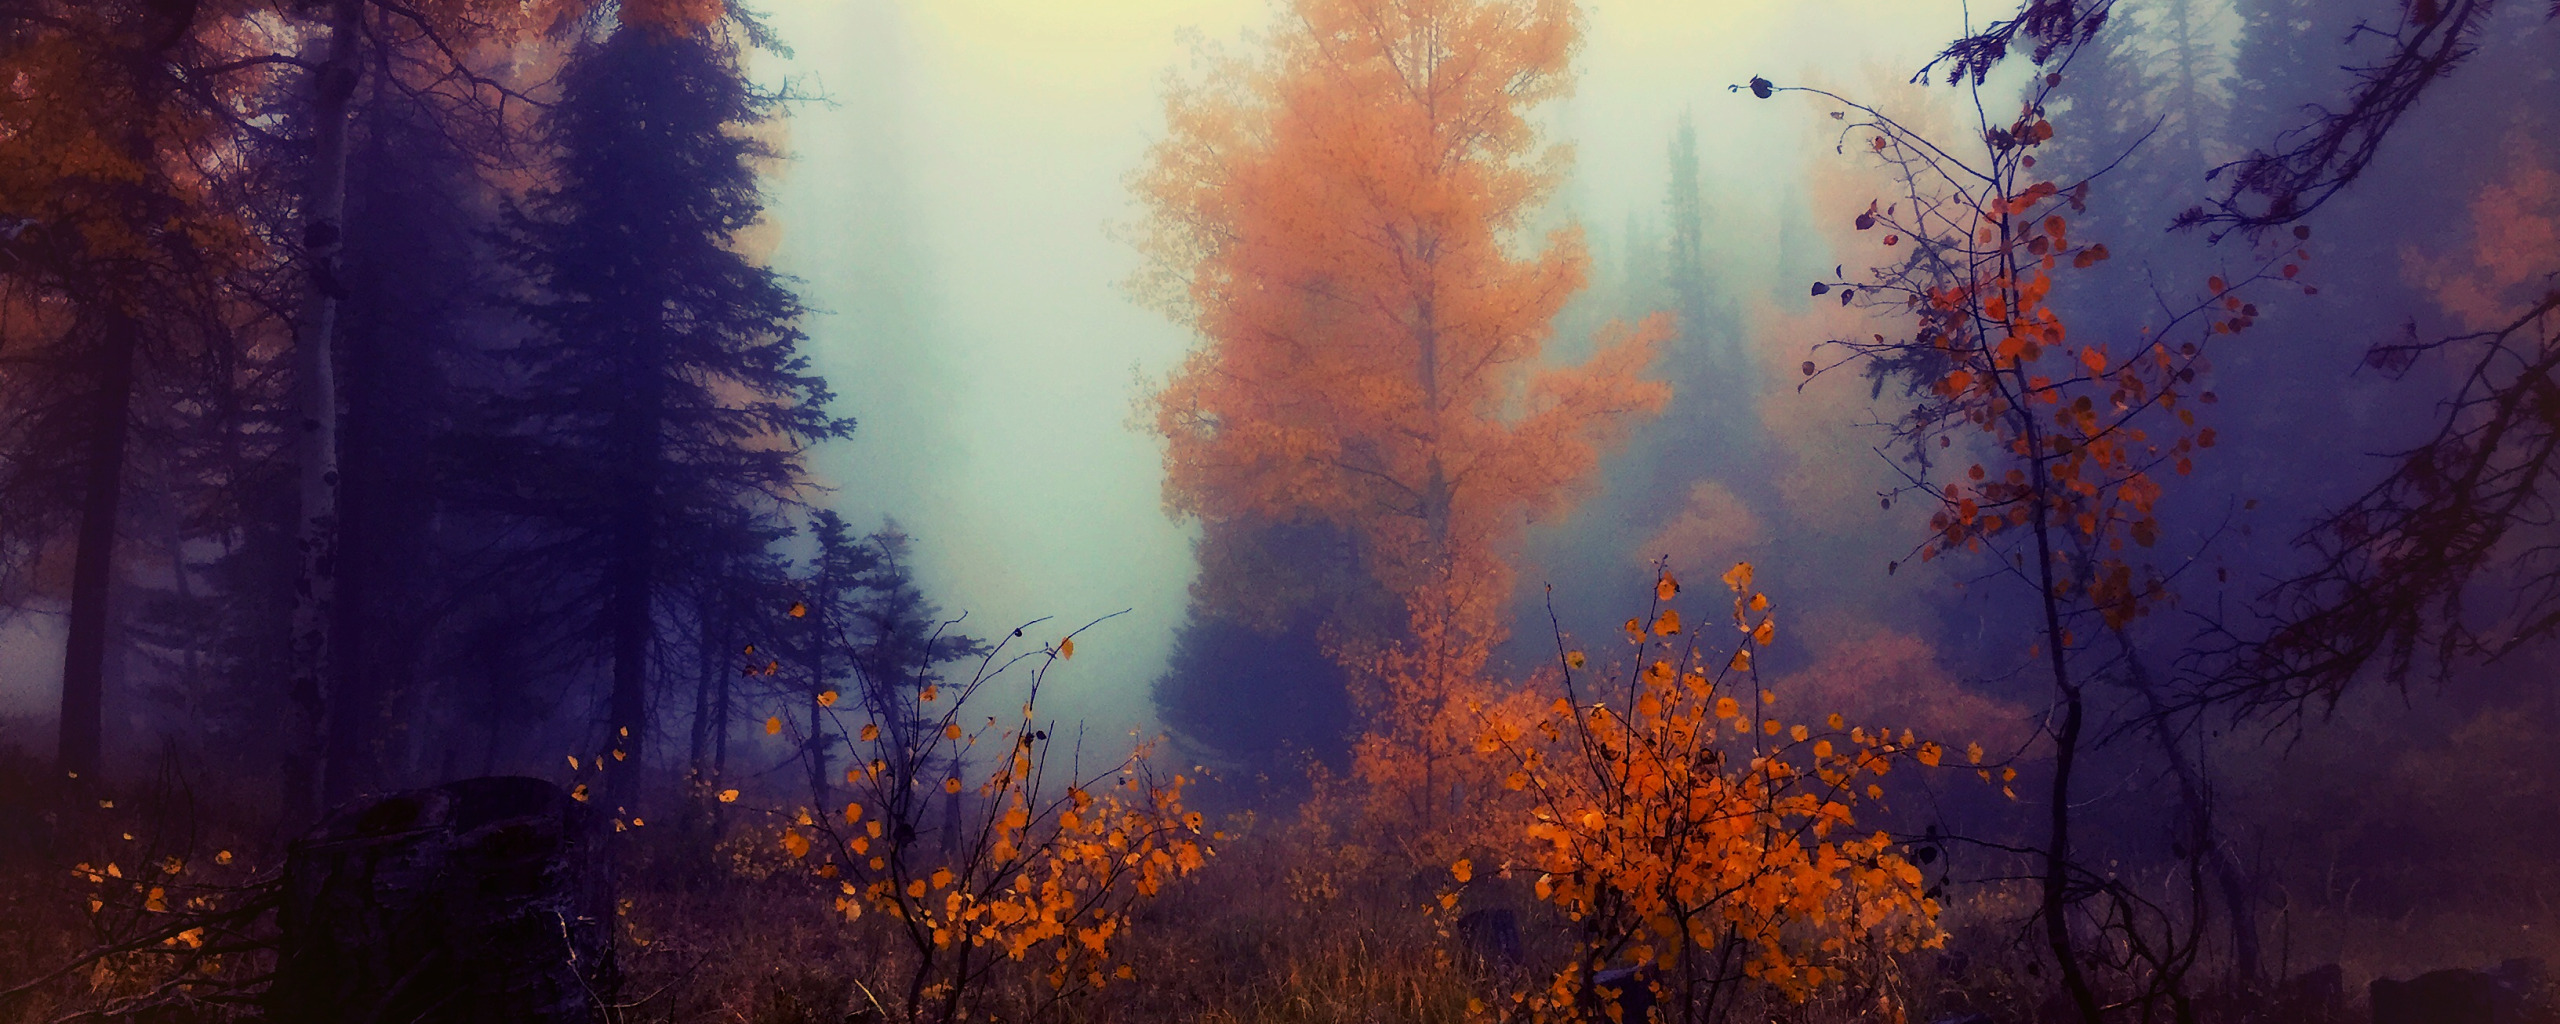 Туман бывает вечером. Осень туман. Лес в тумане. Вечерний туман в лесу. Осенний лес.